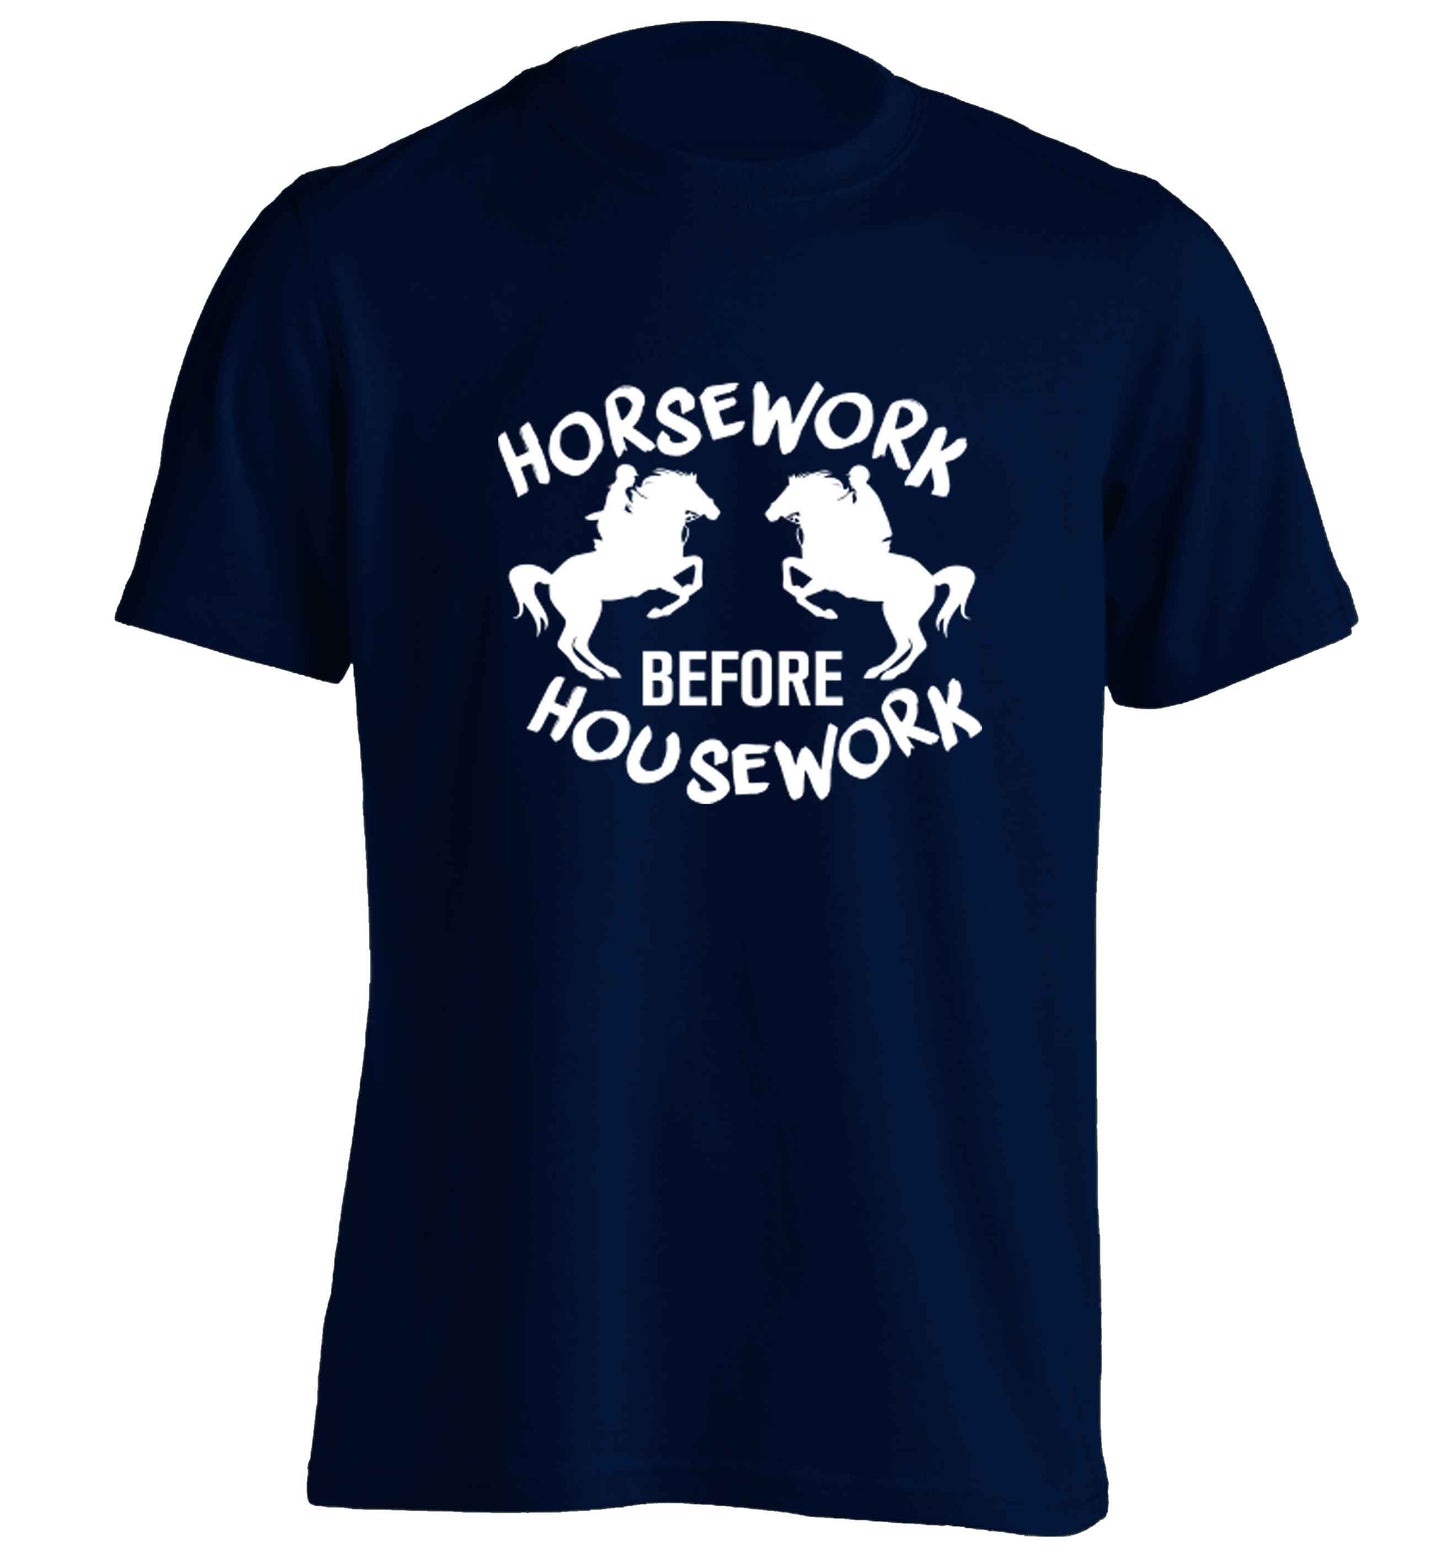 Horsework before housework adults unisex navy Tshirt 2XL